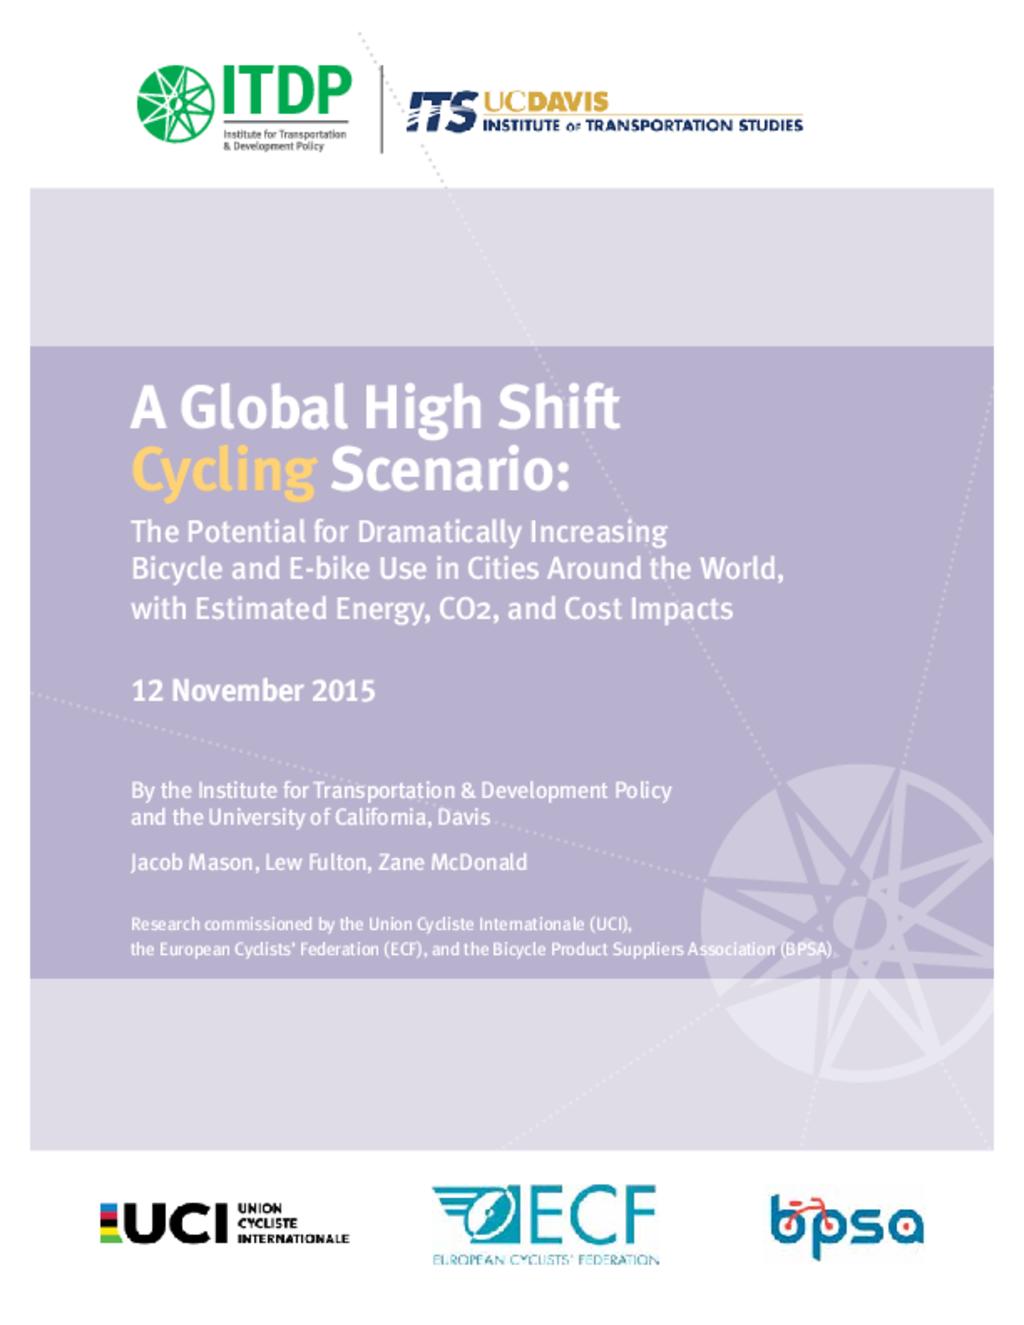 A Global High Shift Cycling Scenario